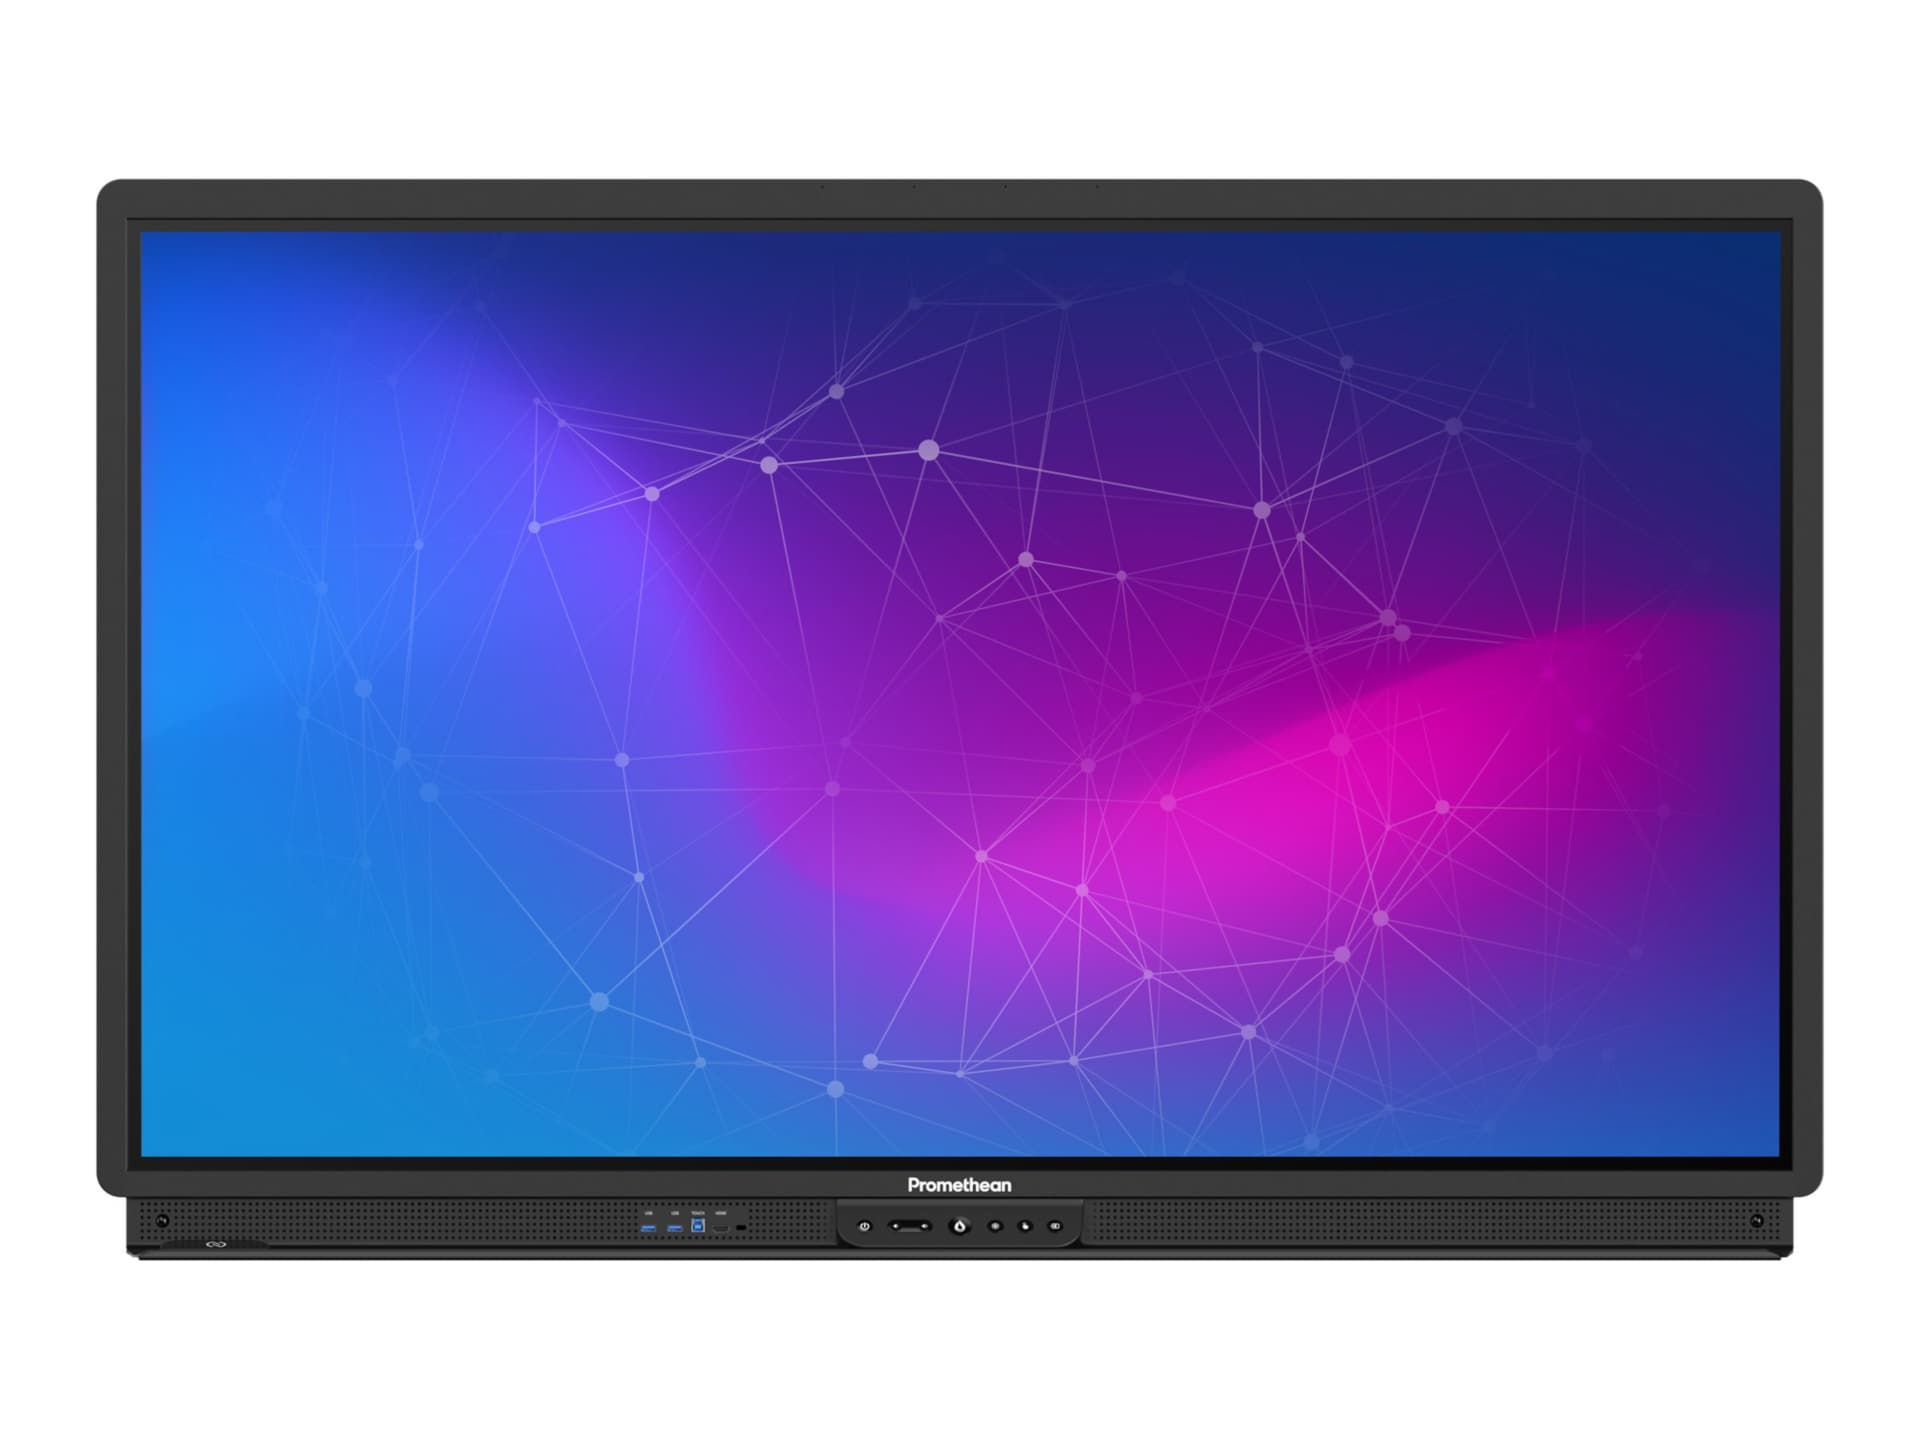 Promethean ActivPanel 9 Premium 75" LED-backlit LCD display - 4K - for interactive communication